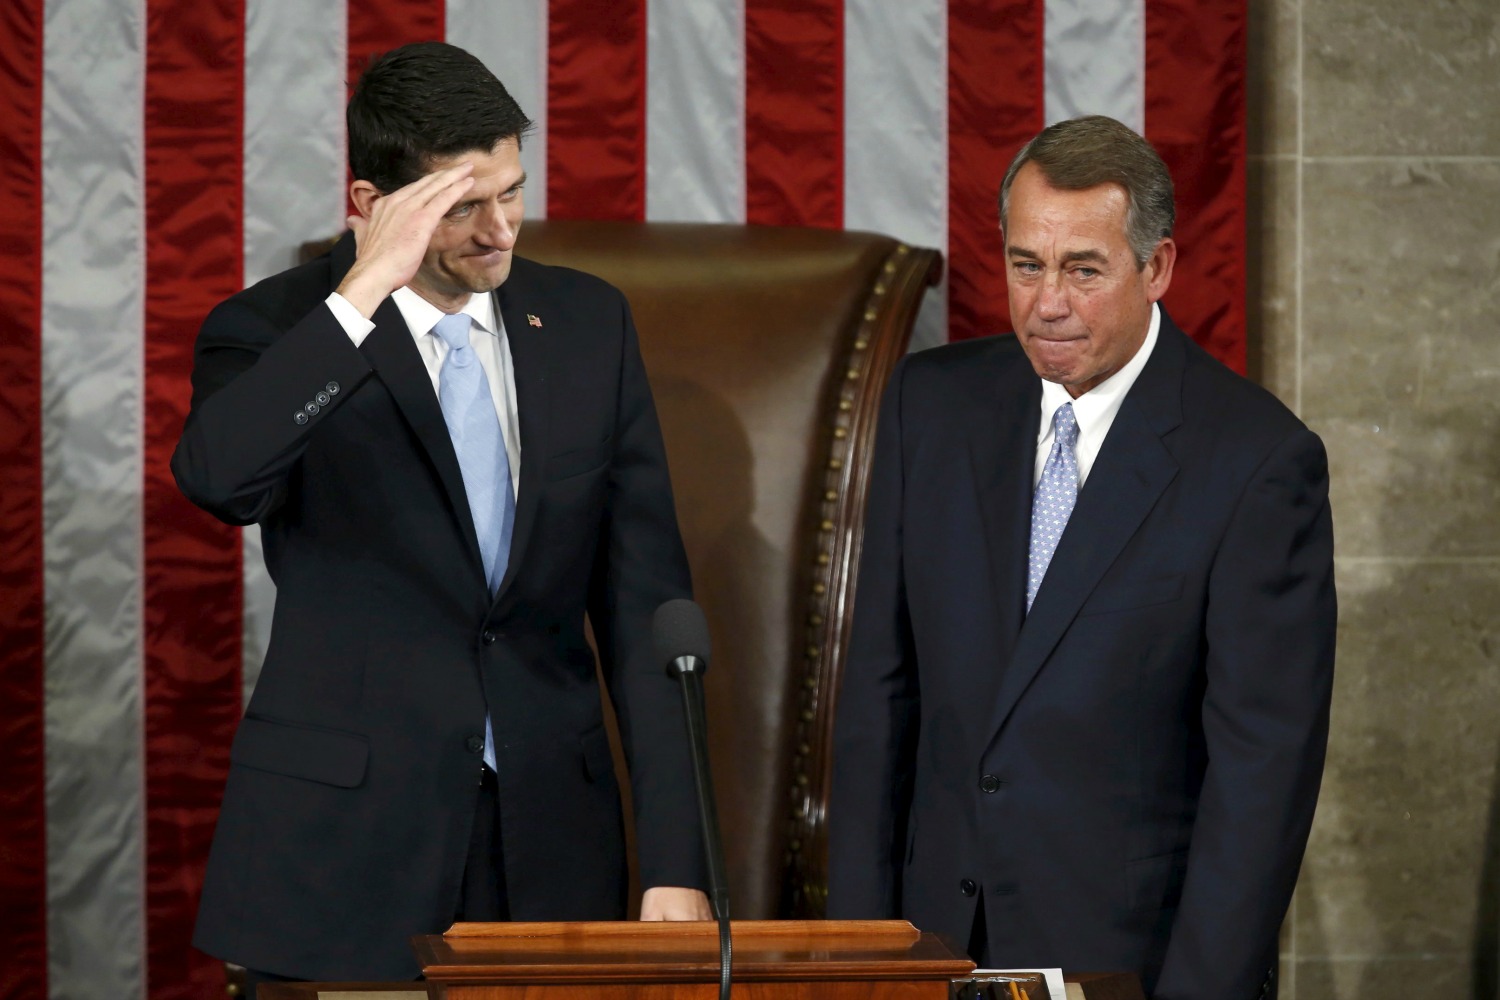 Paul Ryan takes office as the new House speaker